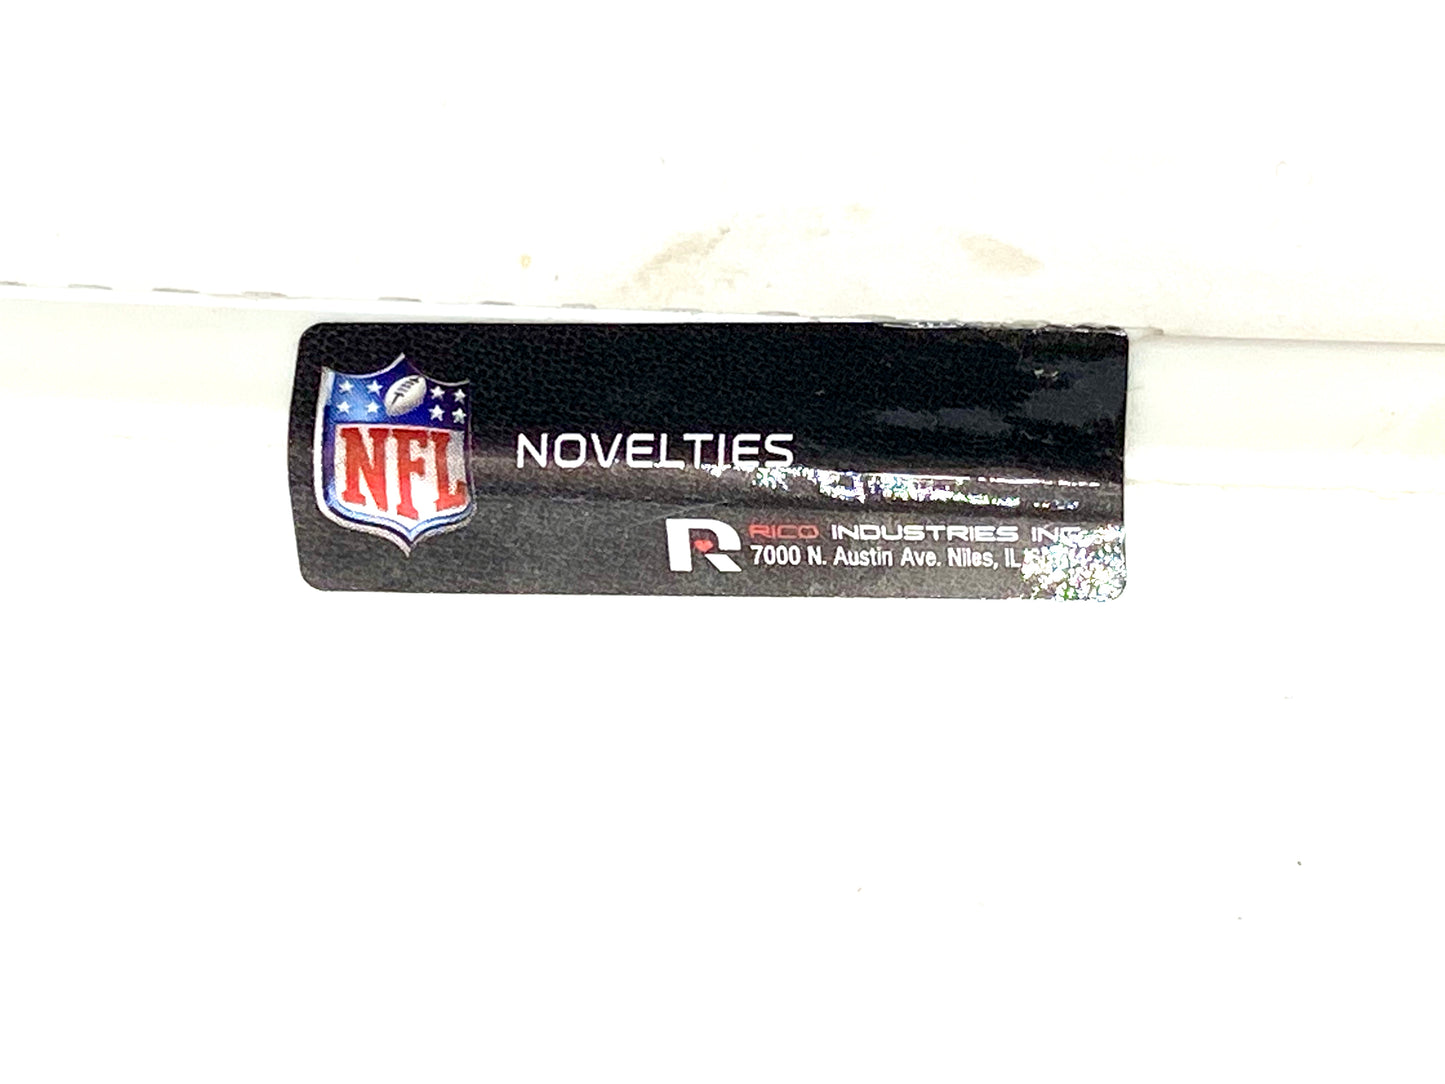 Atlanta Falcons 2016 NFL NFC Champions Car Flag (New) by Rico Industries